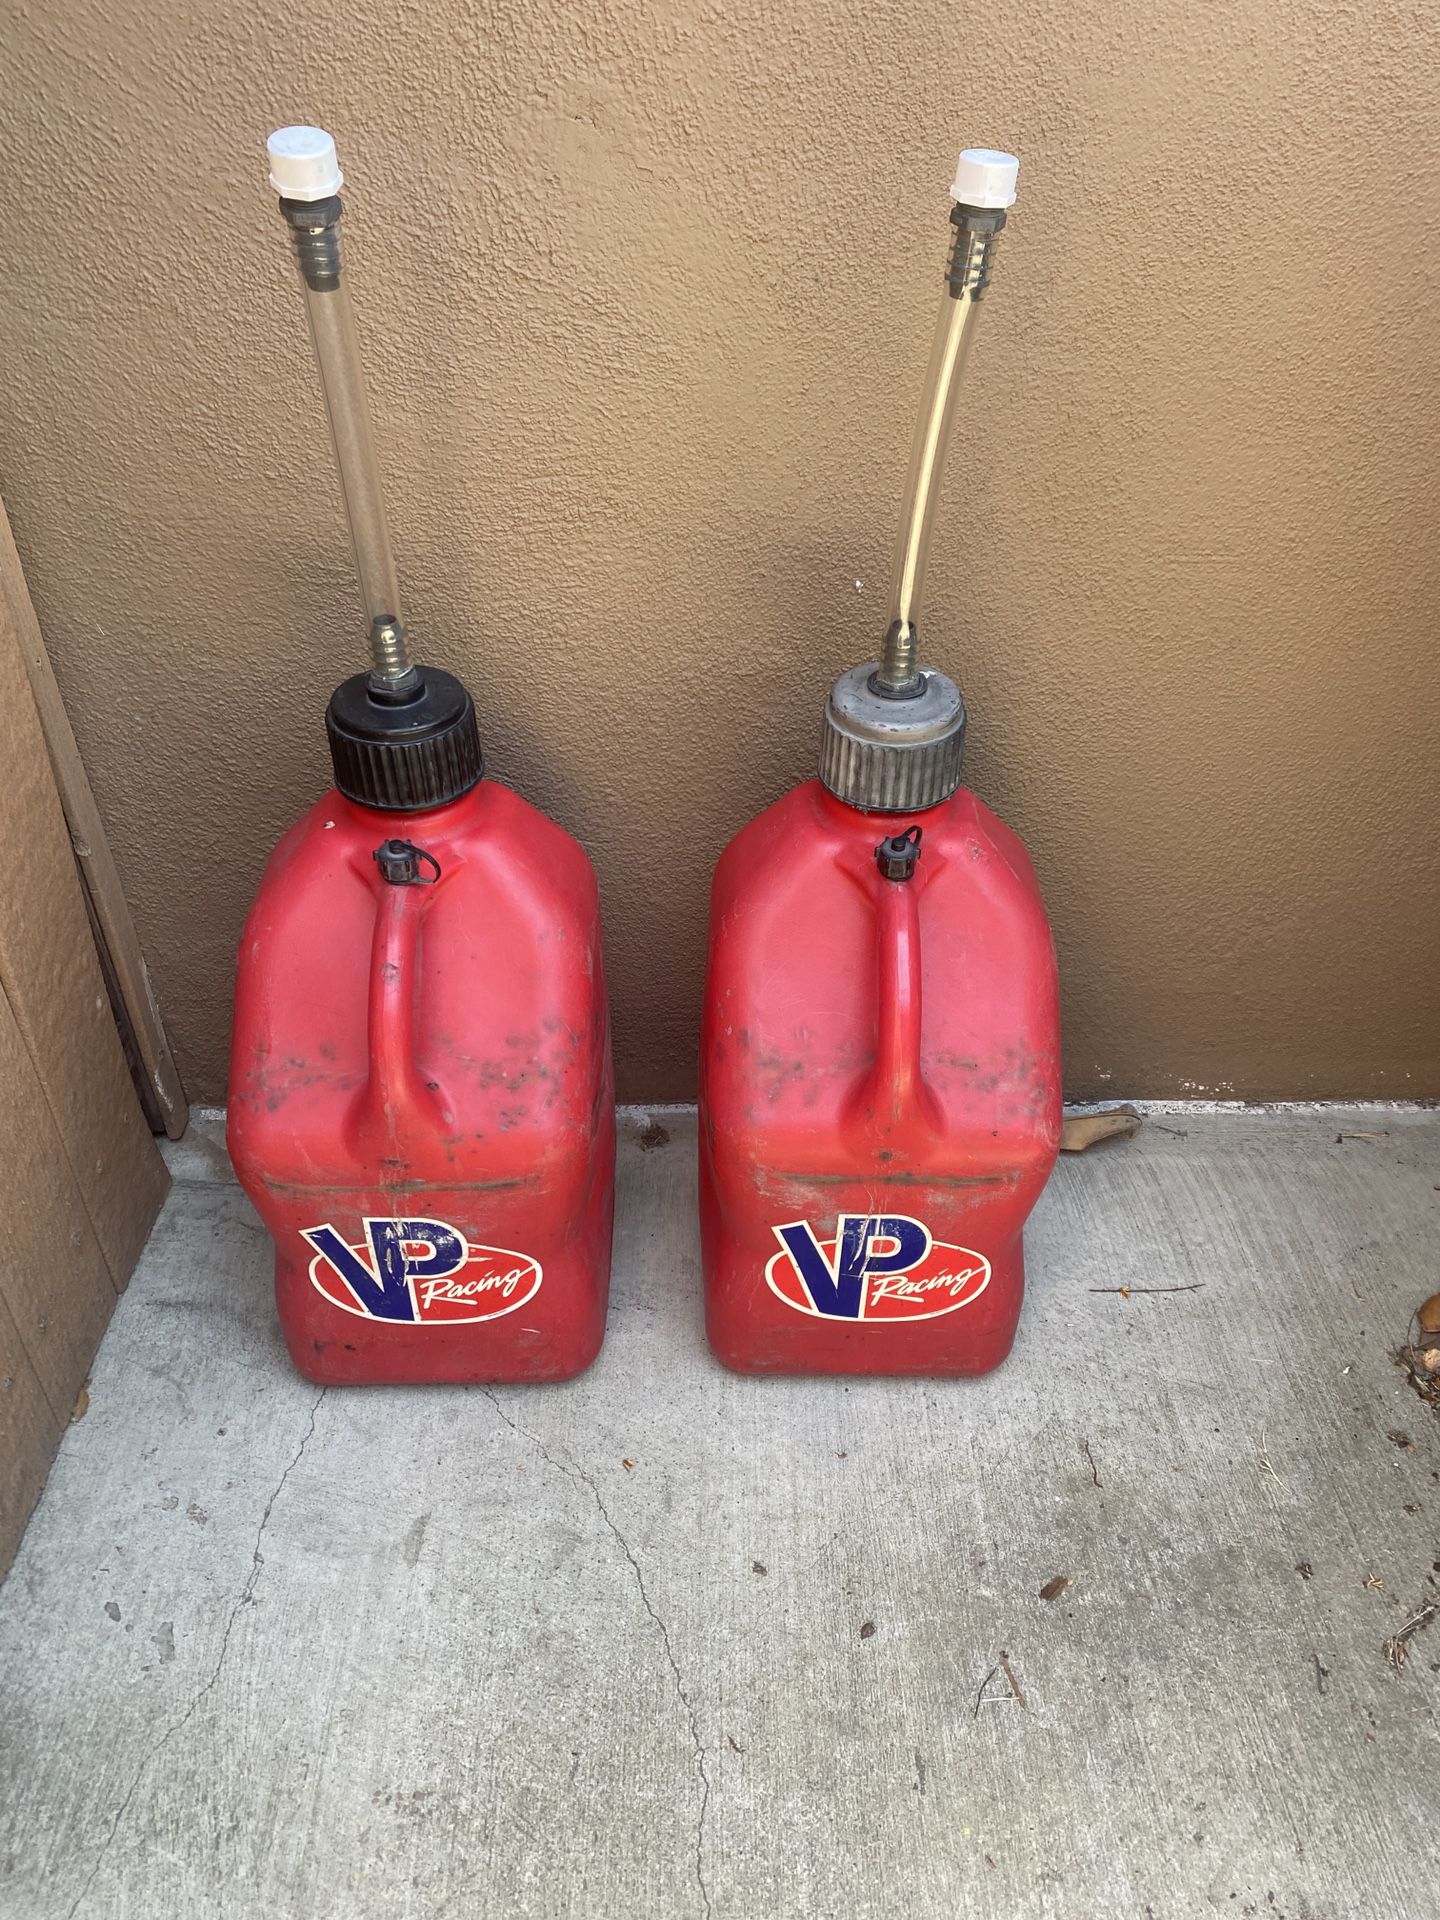 VP Racing 5-Gallon fuel jugs